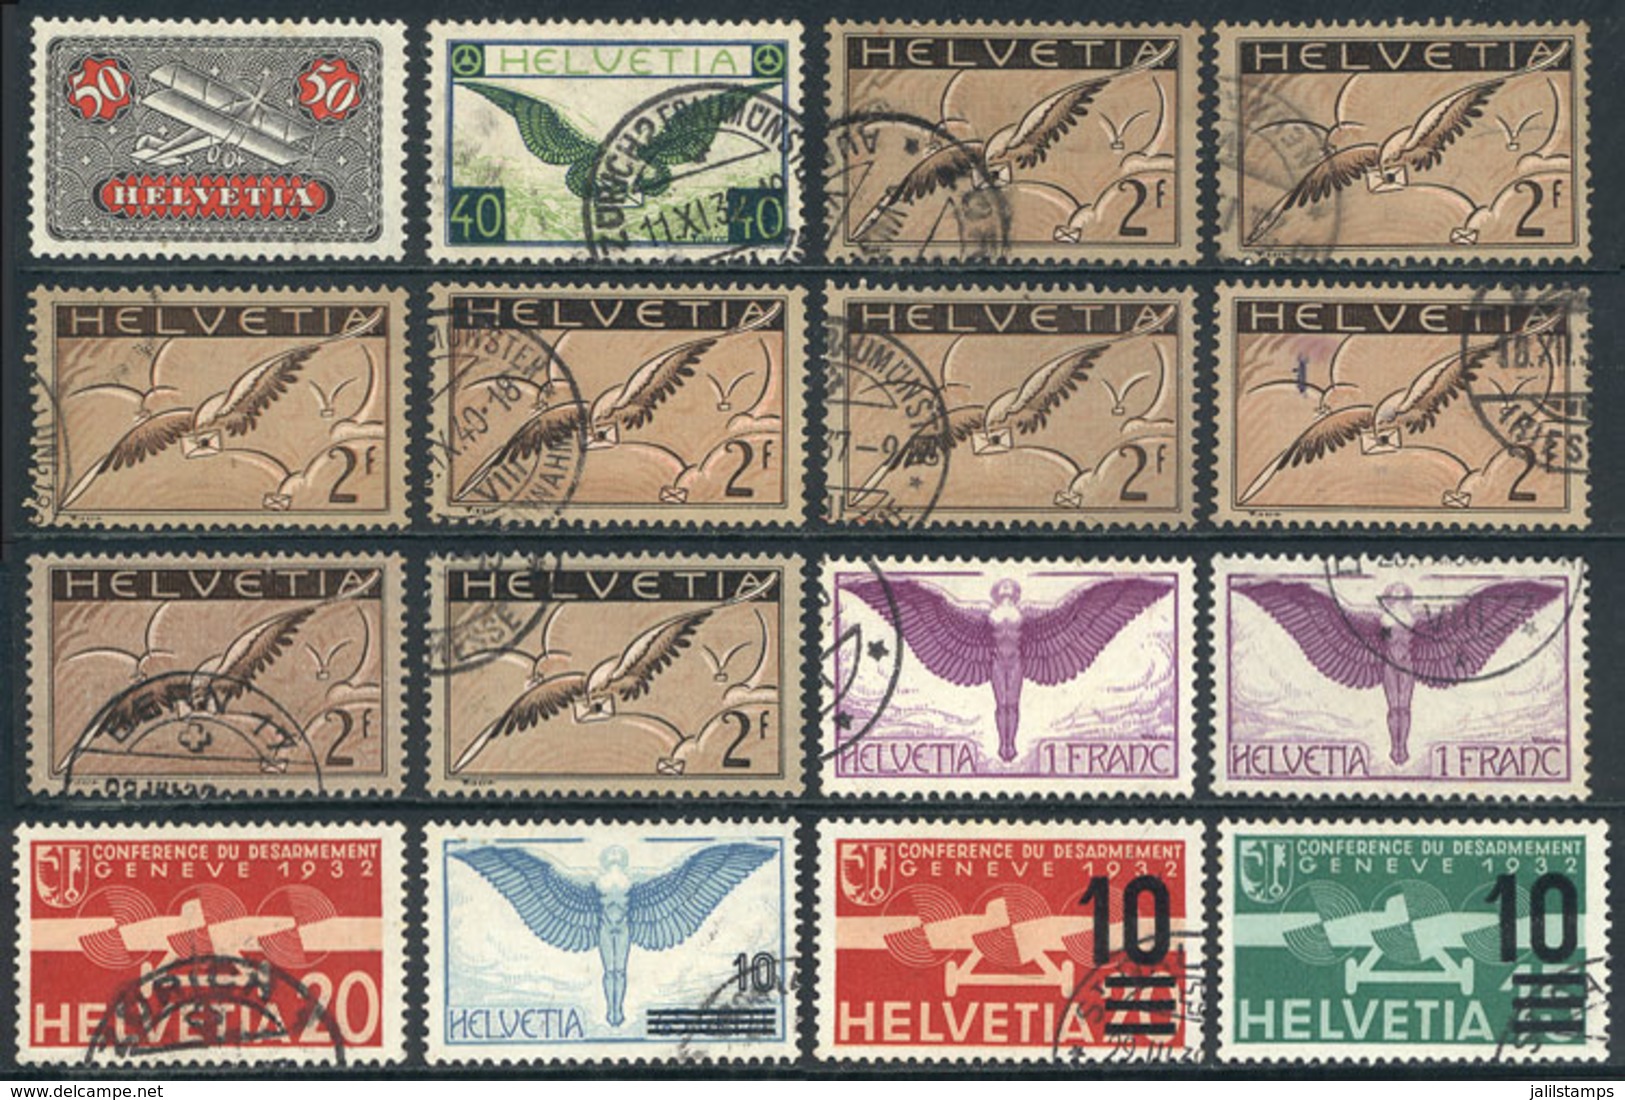 SWITZERLAND: Small Lot Of AIRMAIL Stamps, Fine To Very Fine Quality, Scott Catalog Value US$300+ - Sammlungen